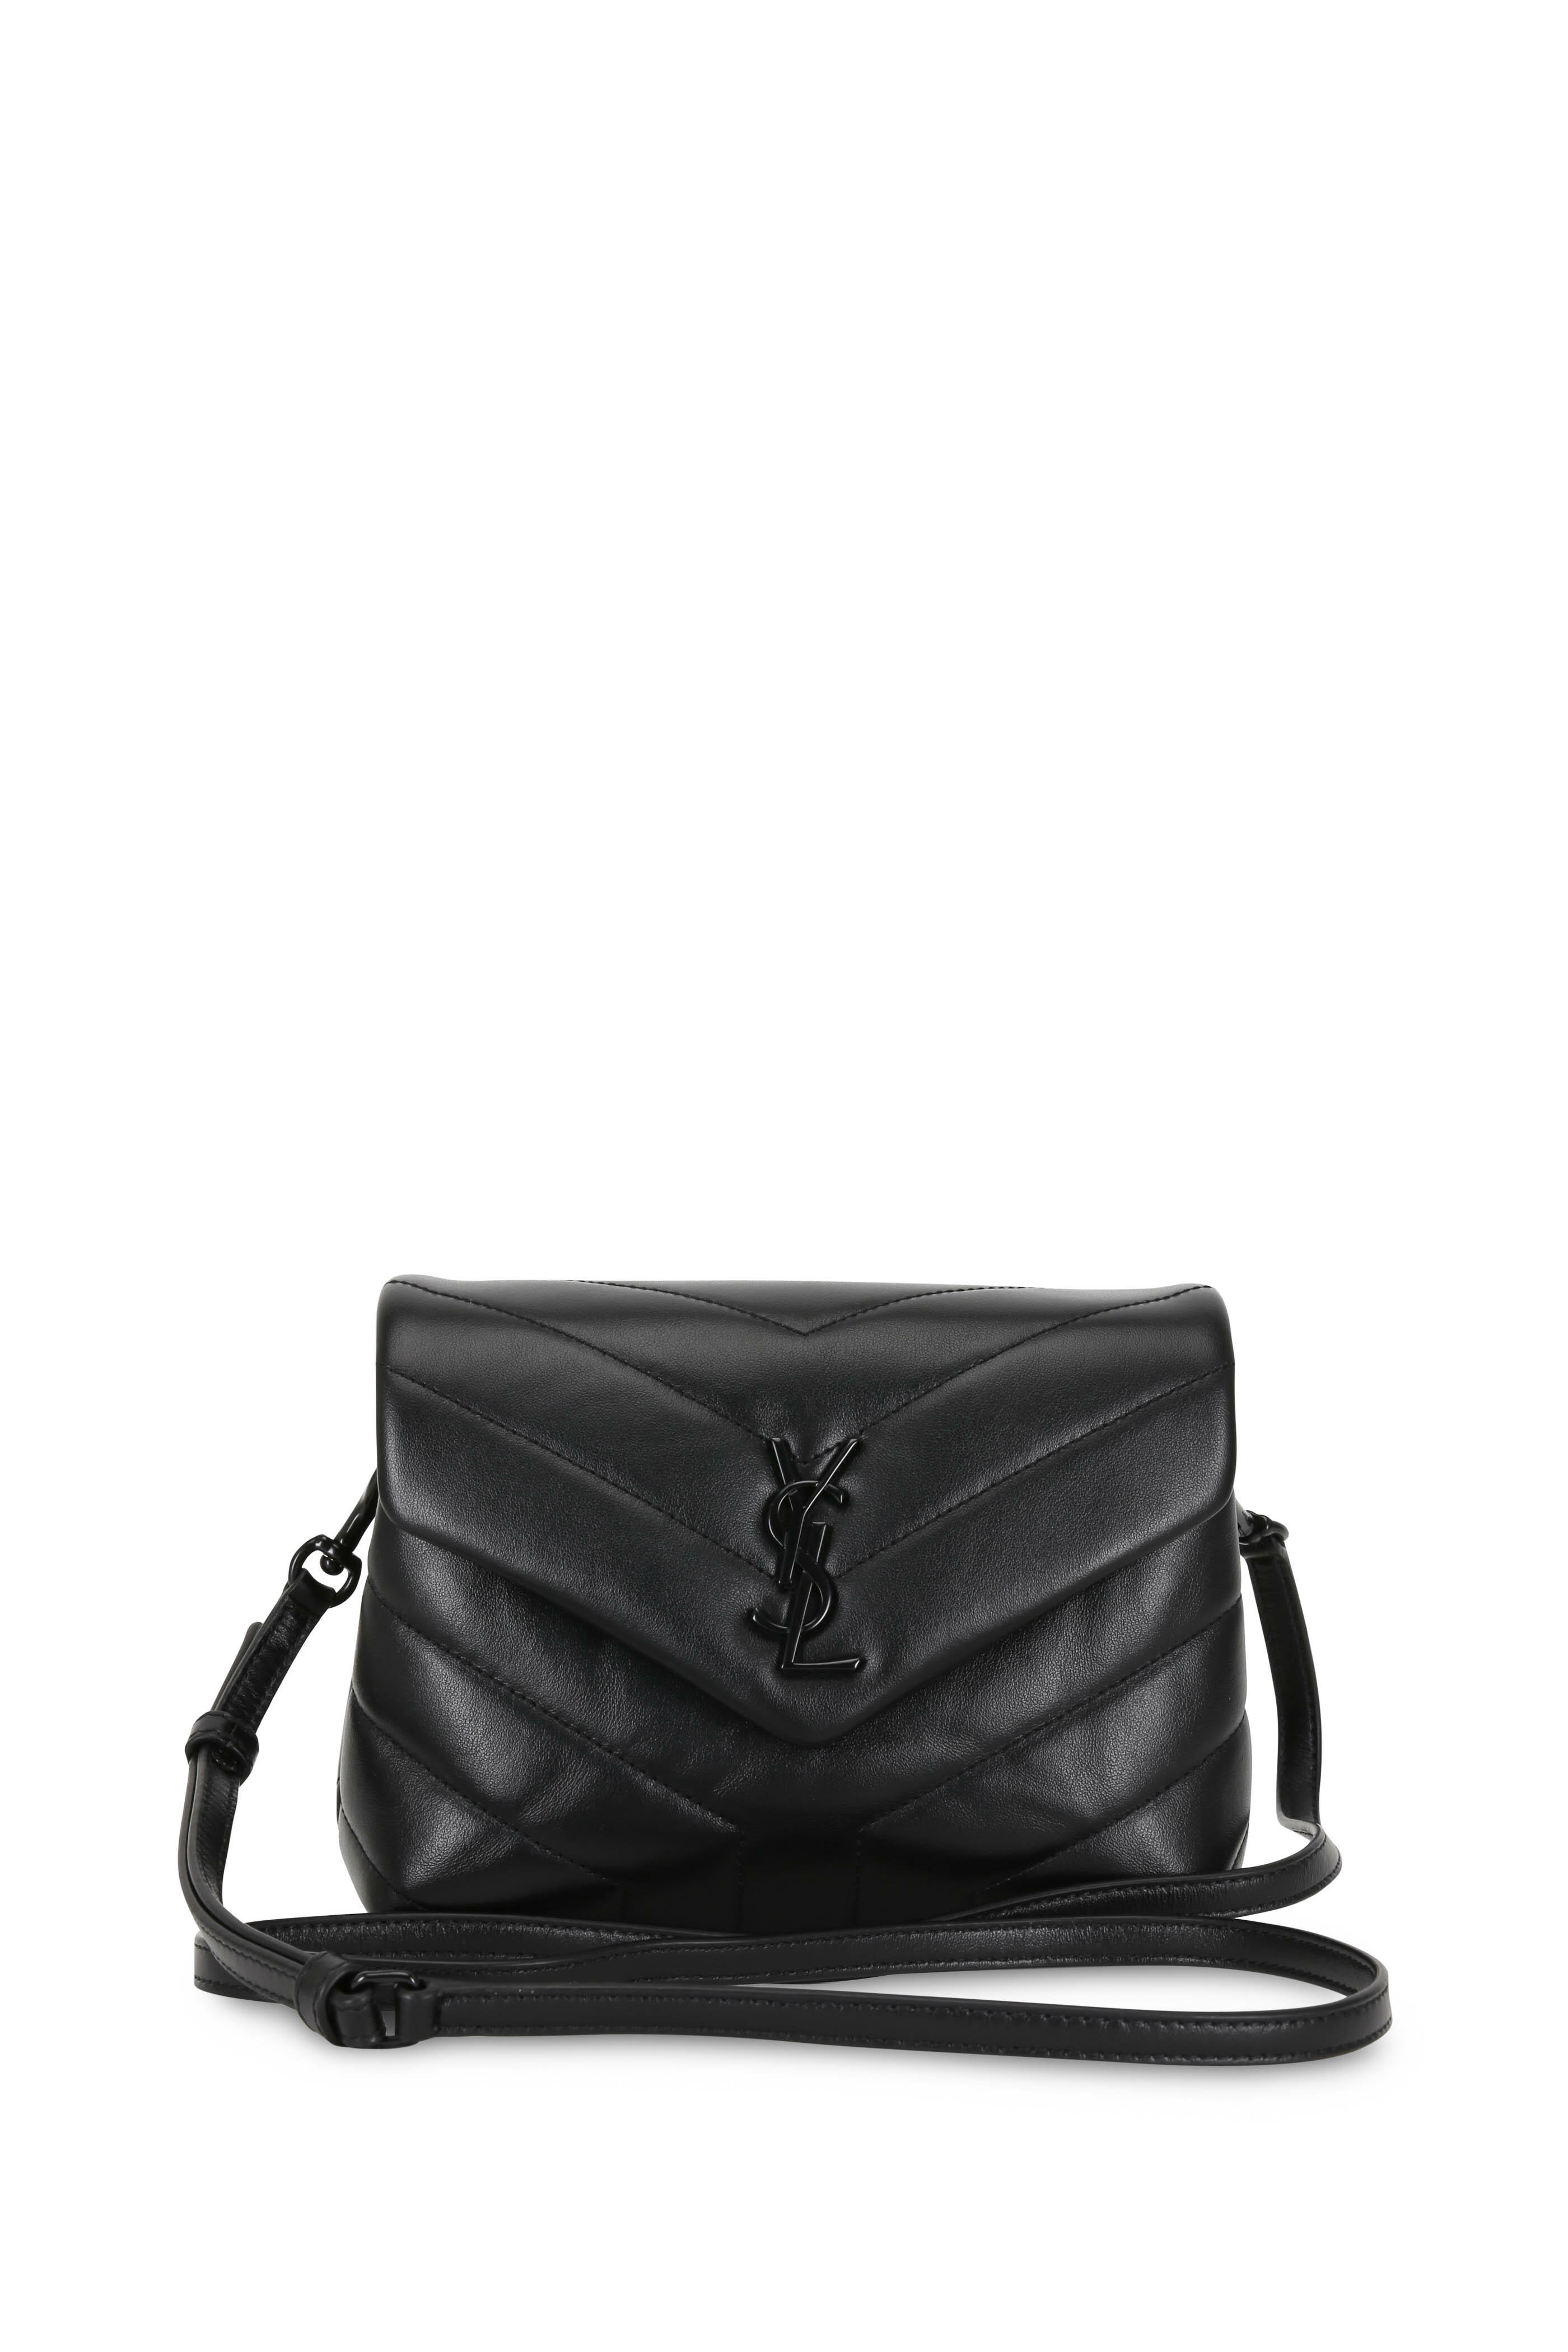 Saint Laurent Mini Lou Quilted Leather Shoulder Bag In Black